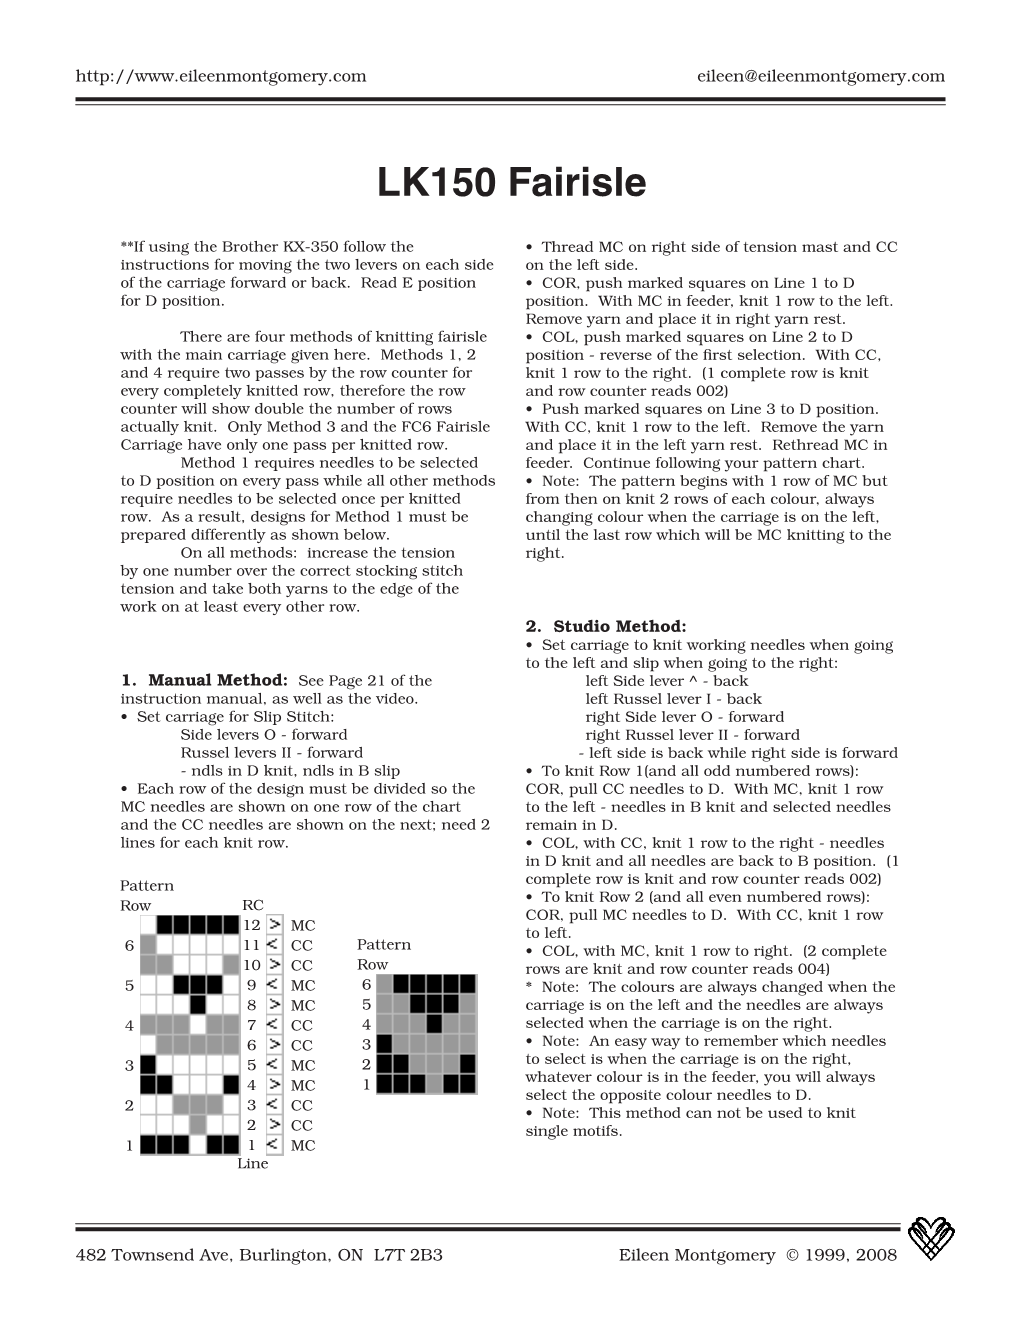 LK150 Fairisle